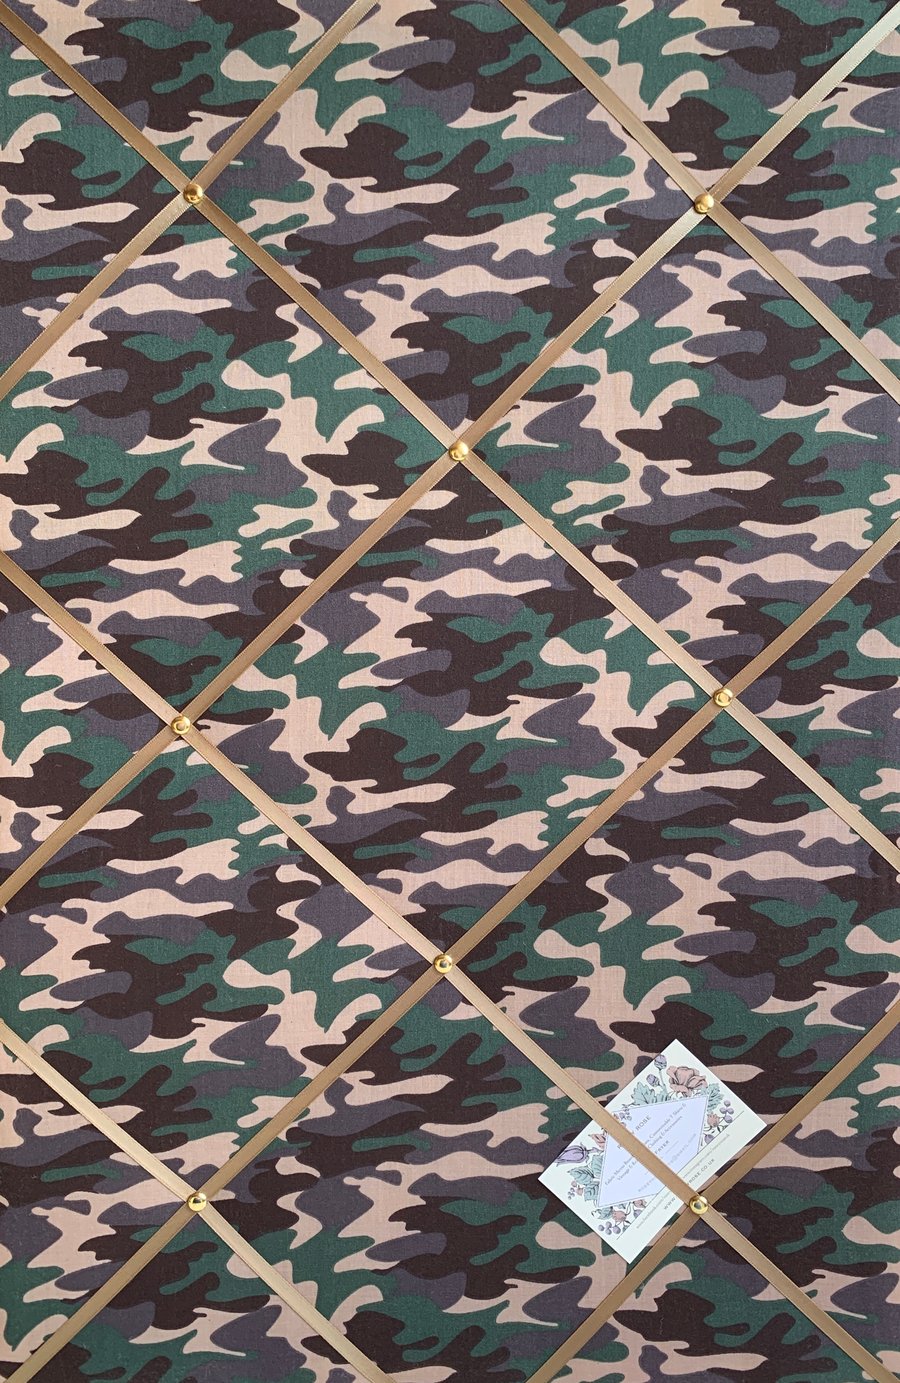 Handmade Bespoke Memo Notice Board Khaki Camouflage Army Print Fabric